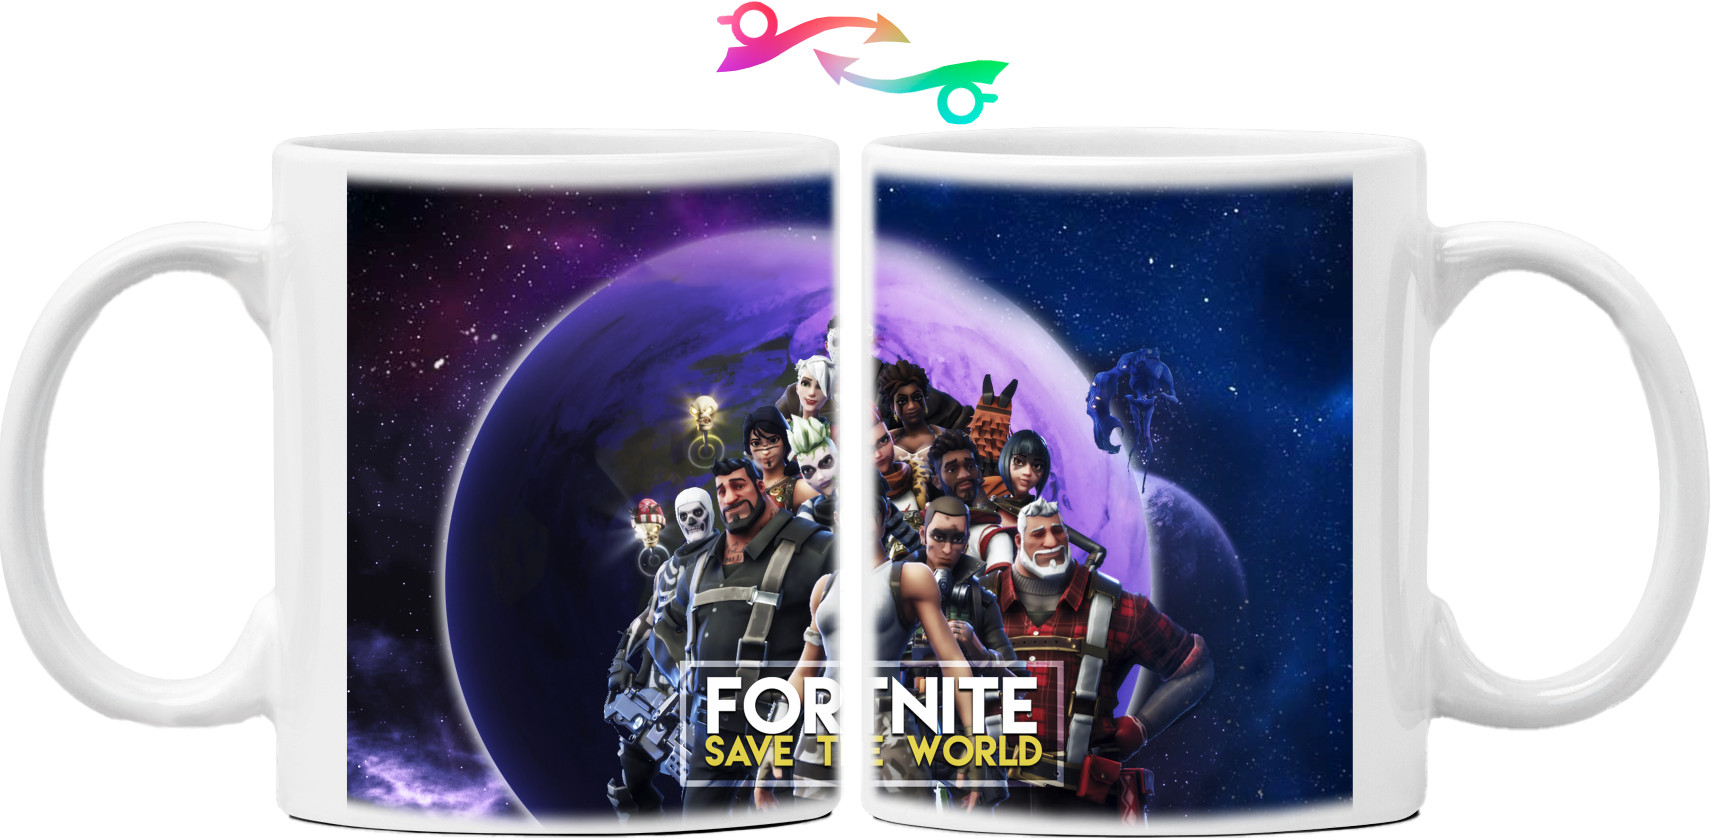 Fortnite Save The World